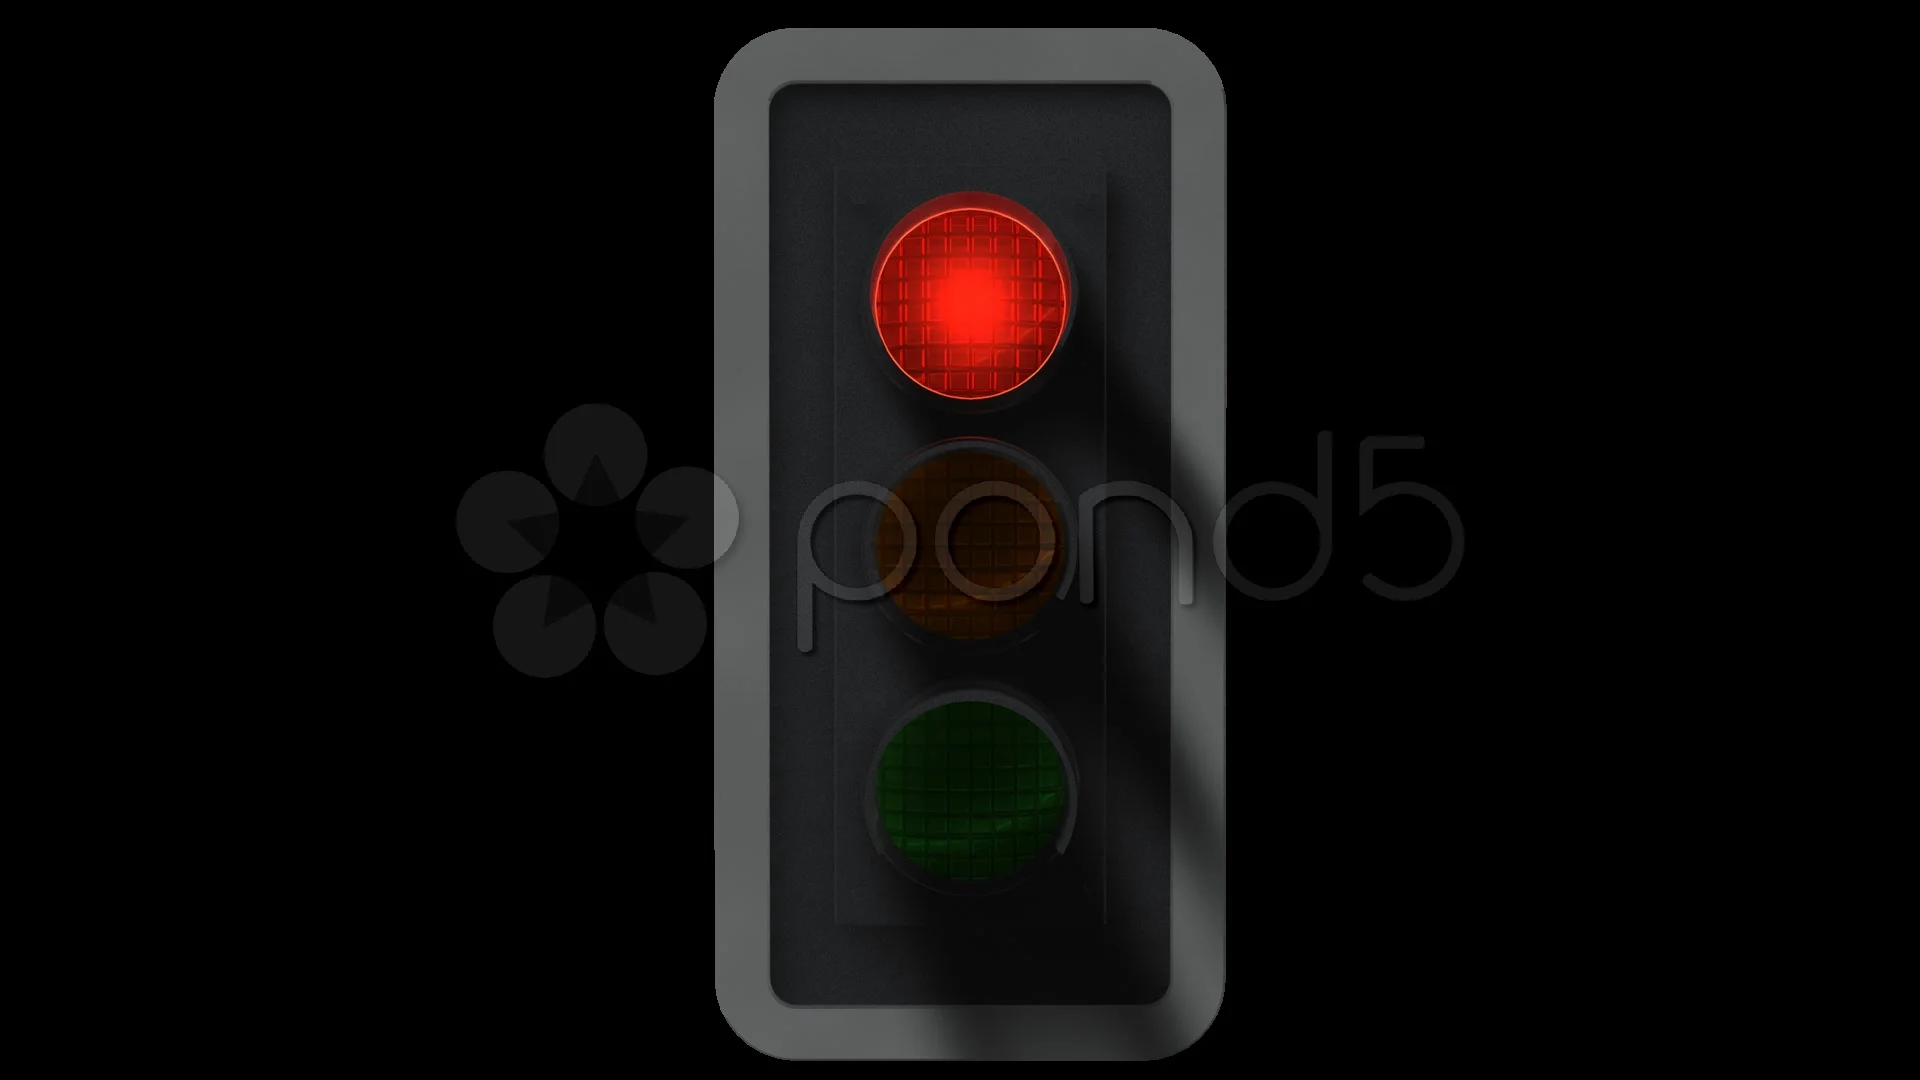 db traffic light 01 hd1080 | Stock Video | Pond5